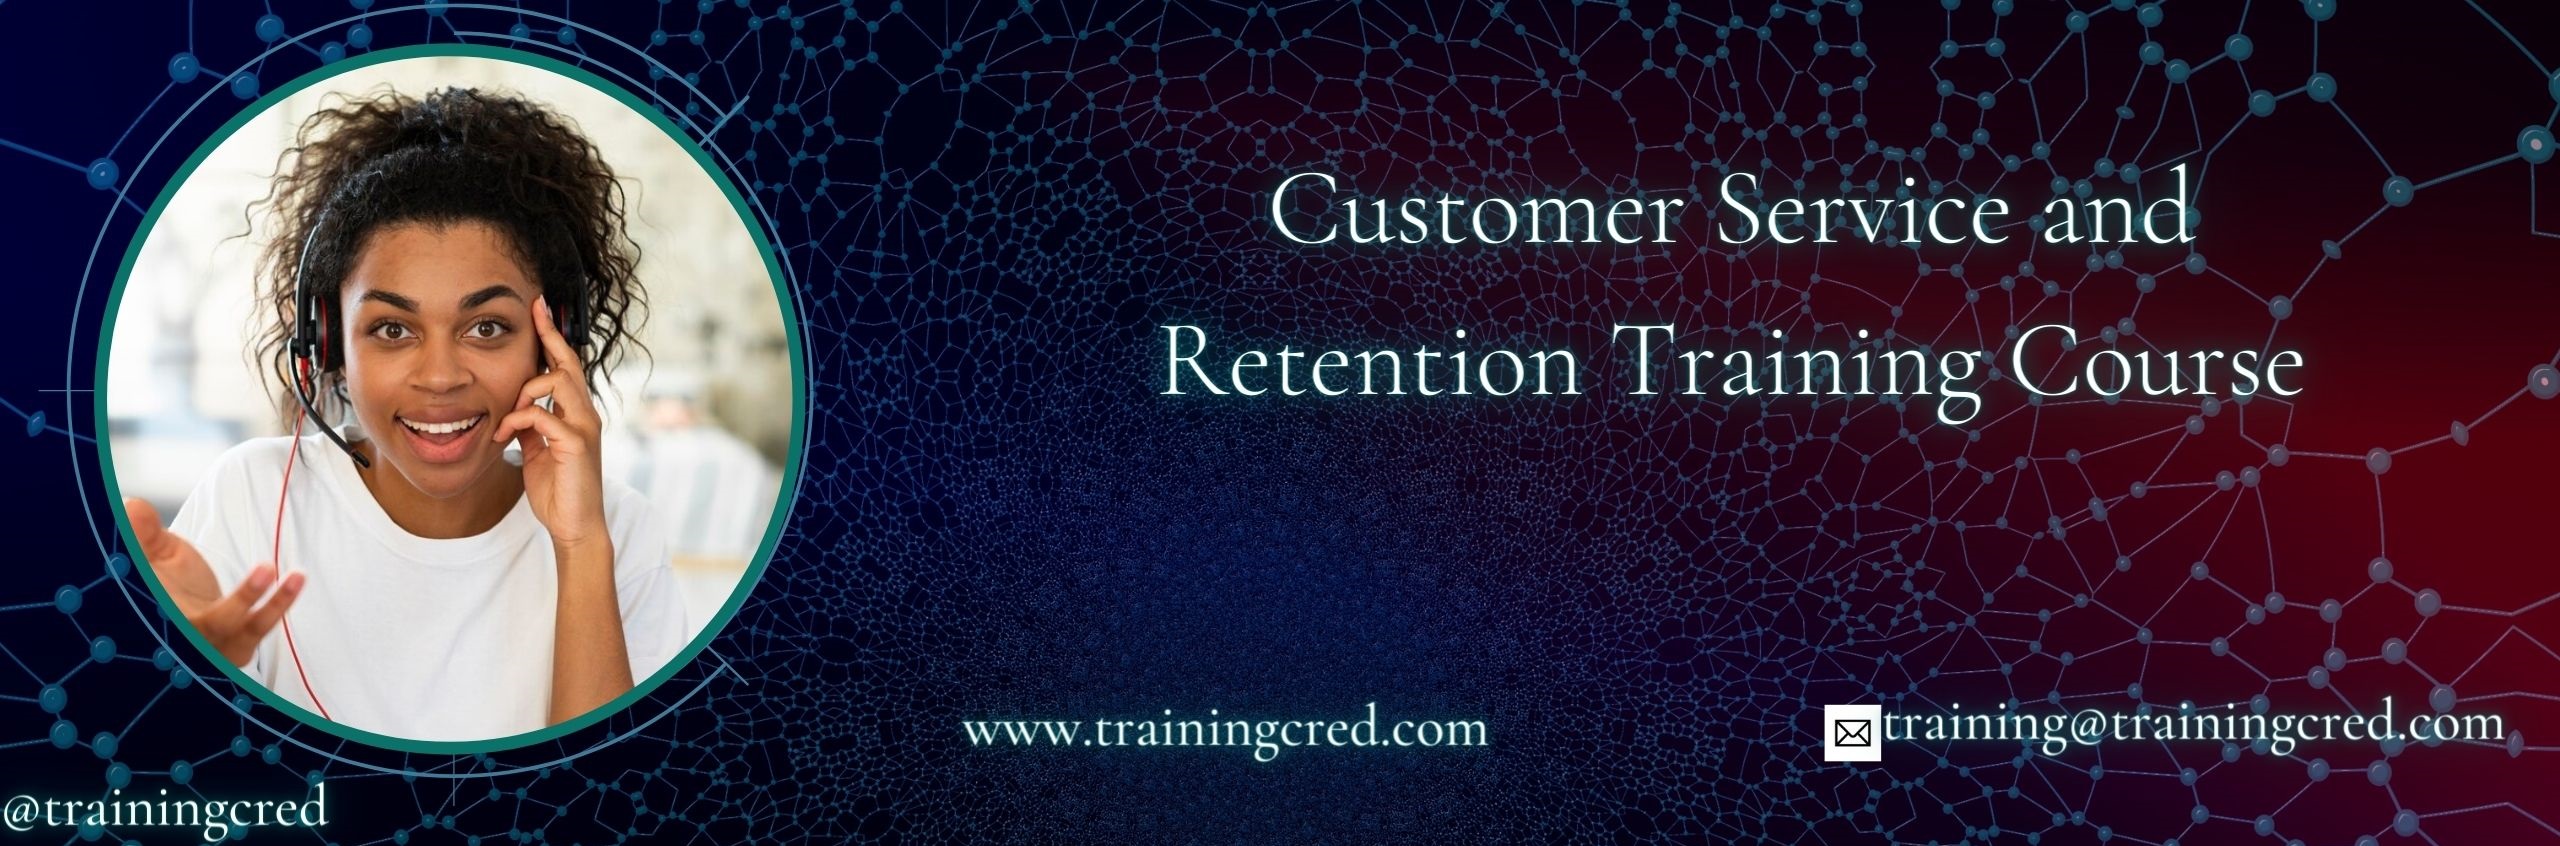 Customer Service and Retention Training